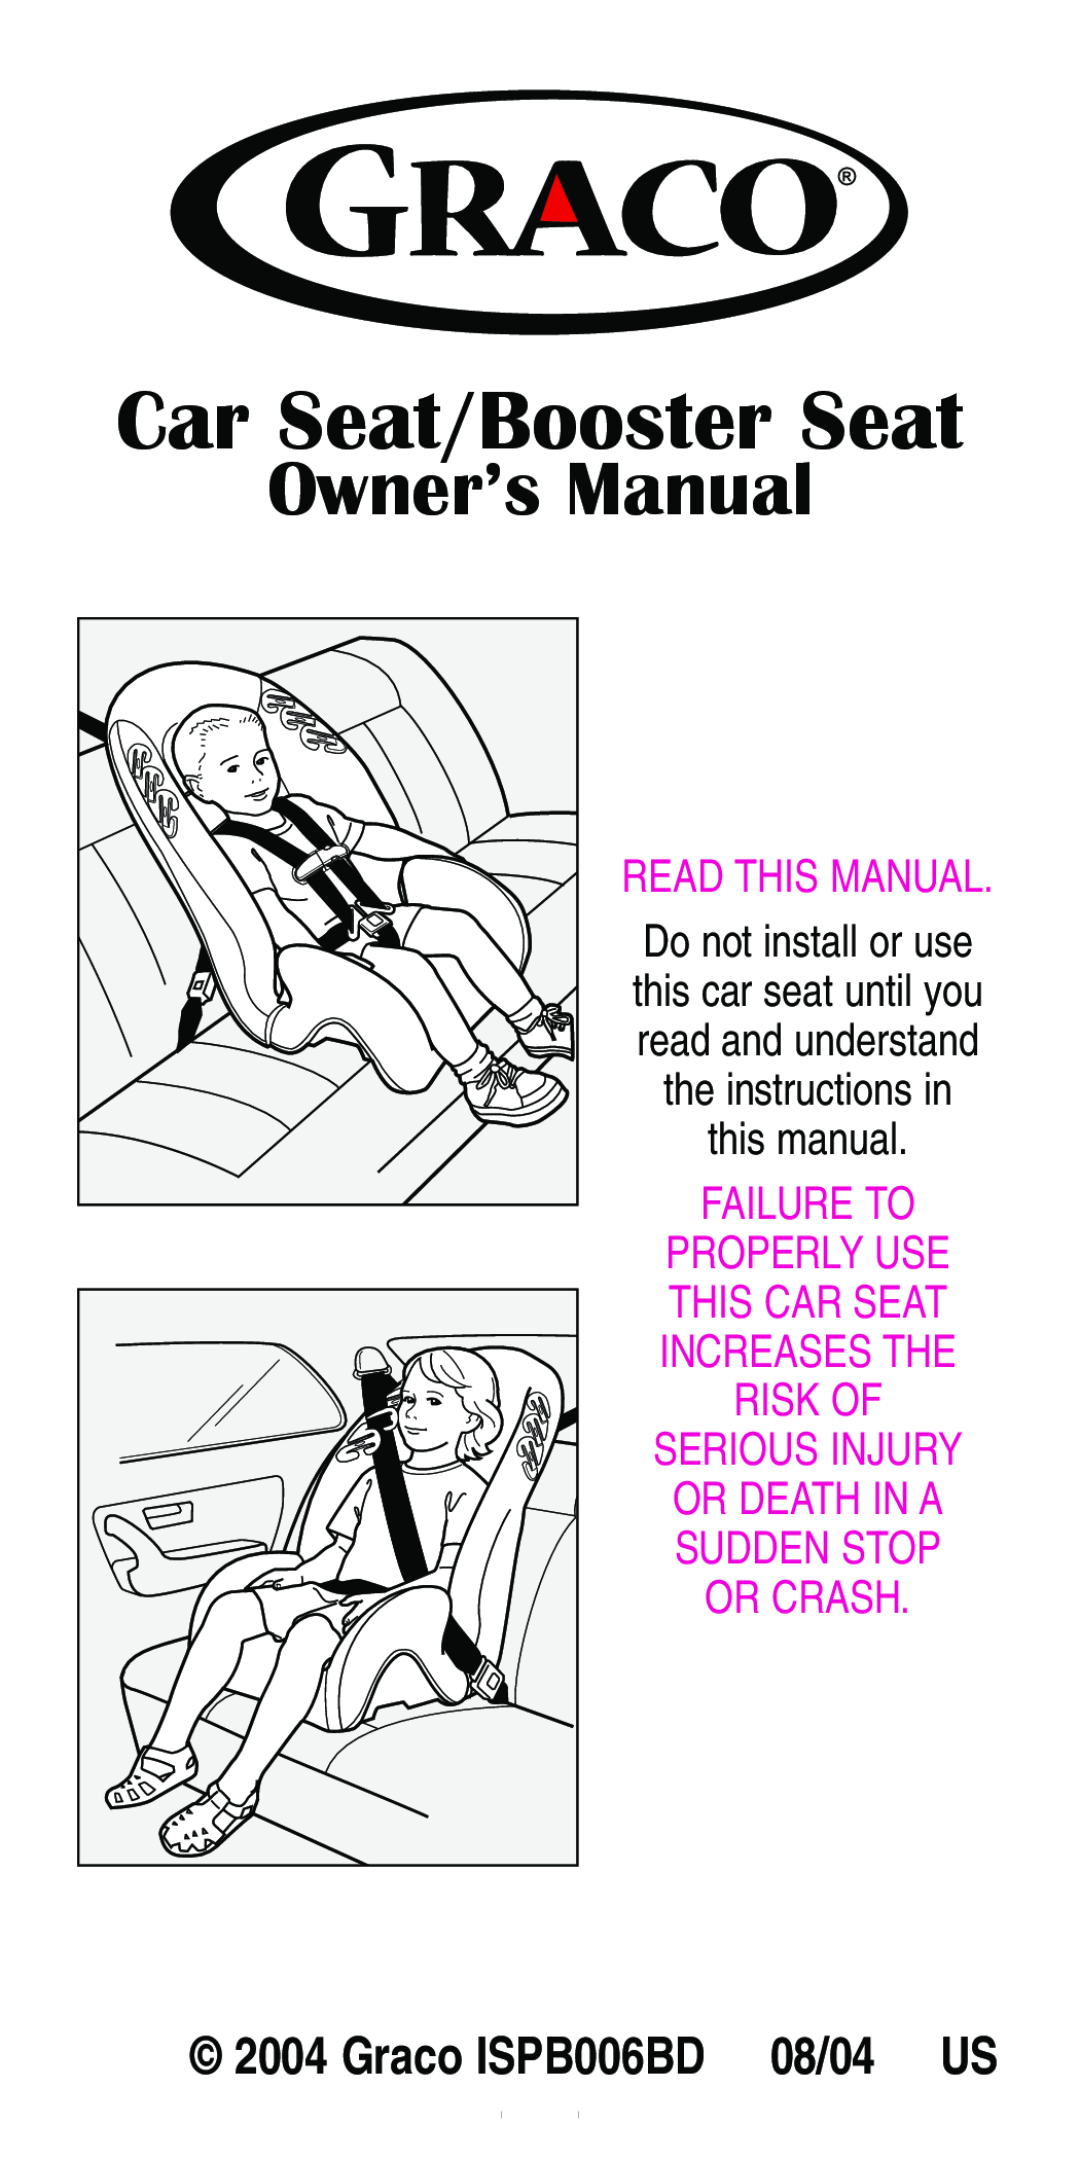 Graco manual Car Seat/Booster Seat, Owner’s Manual, Graco ISPB006BD 08/04 US, Read This Manual 